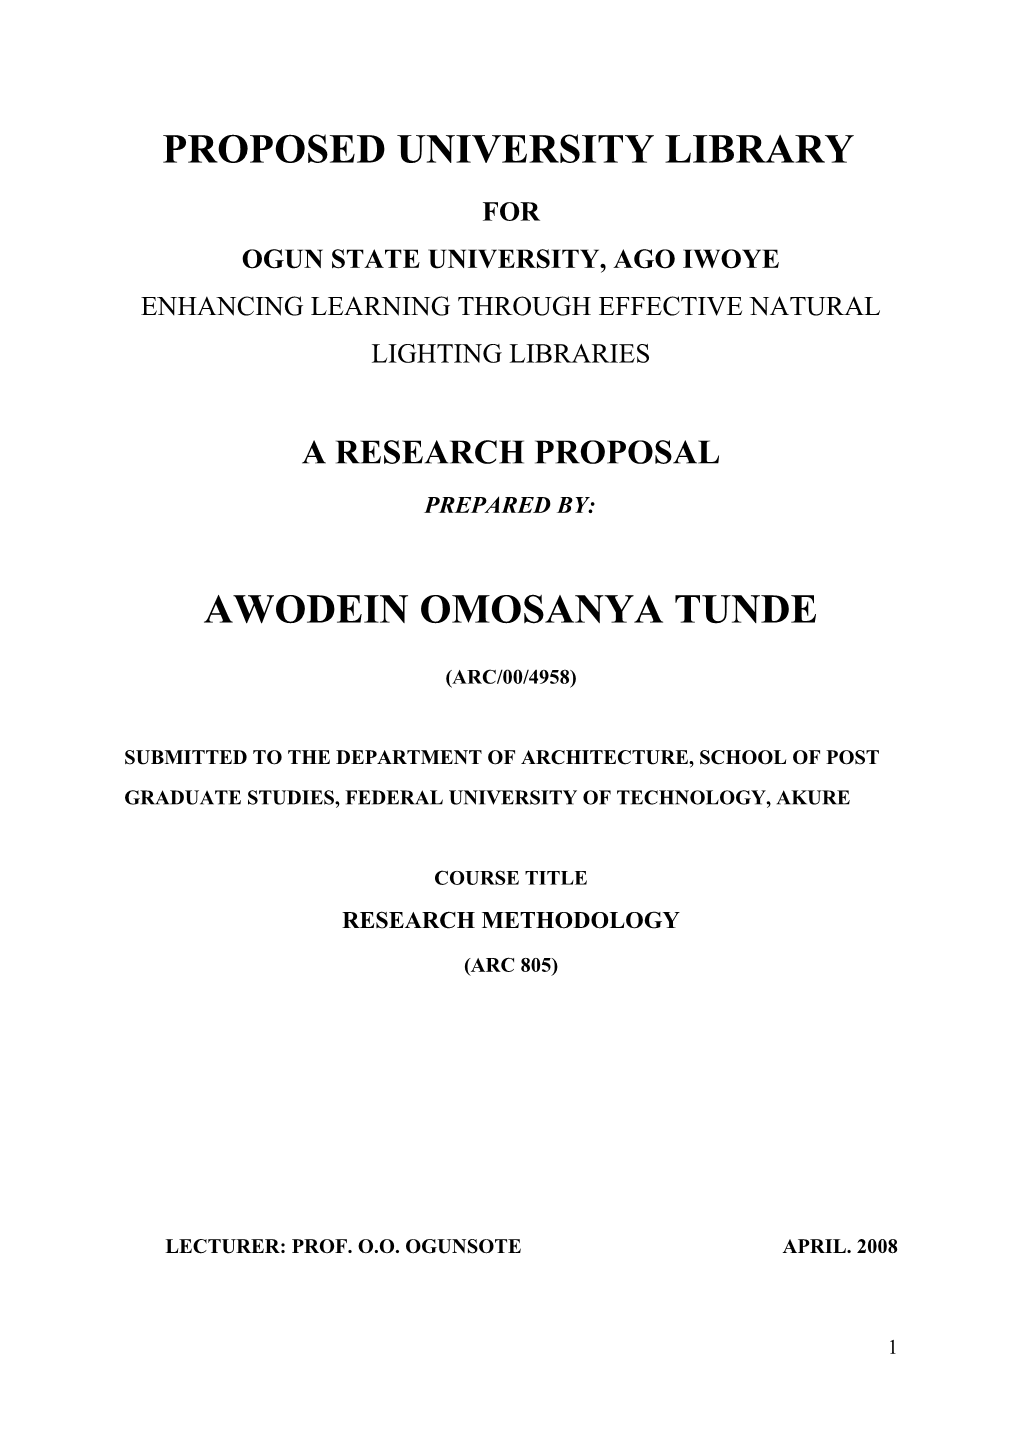 Ogun State University, Ago Iwoye